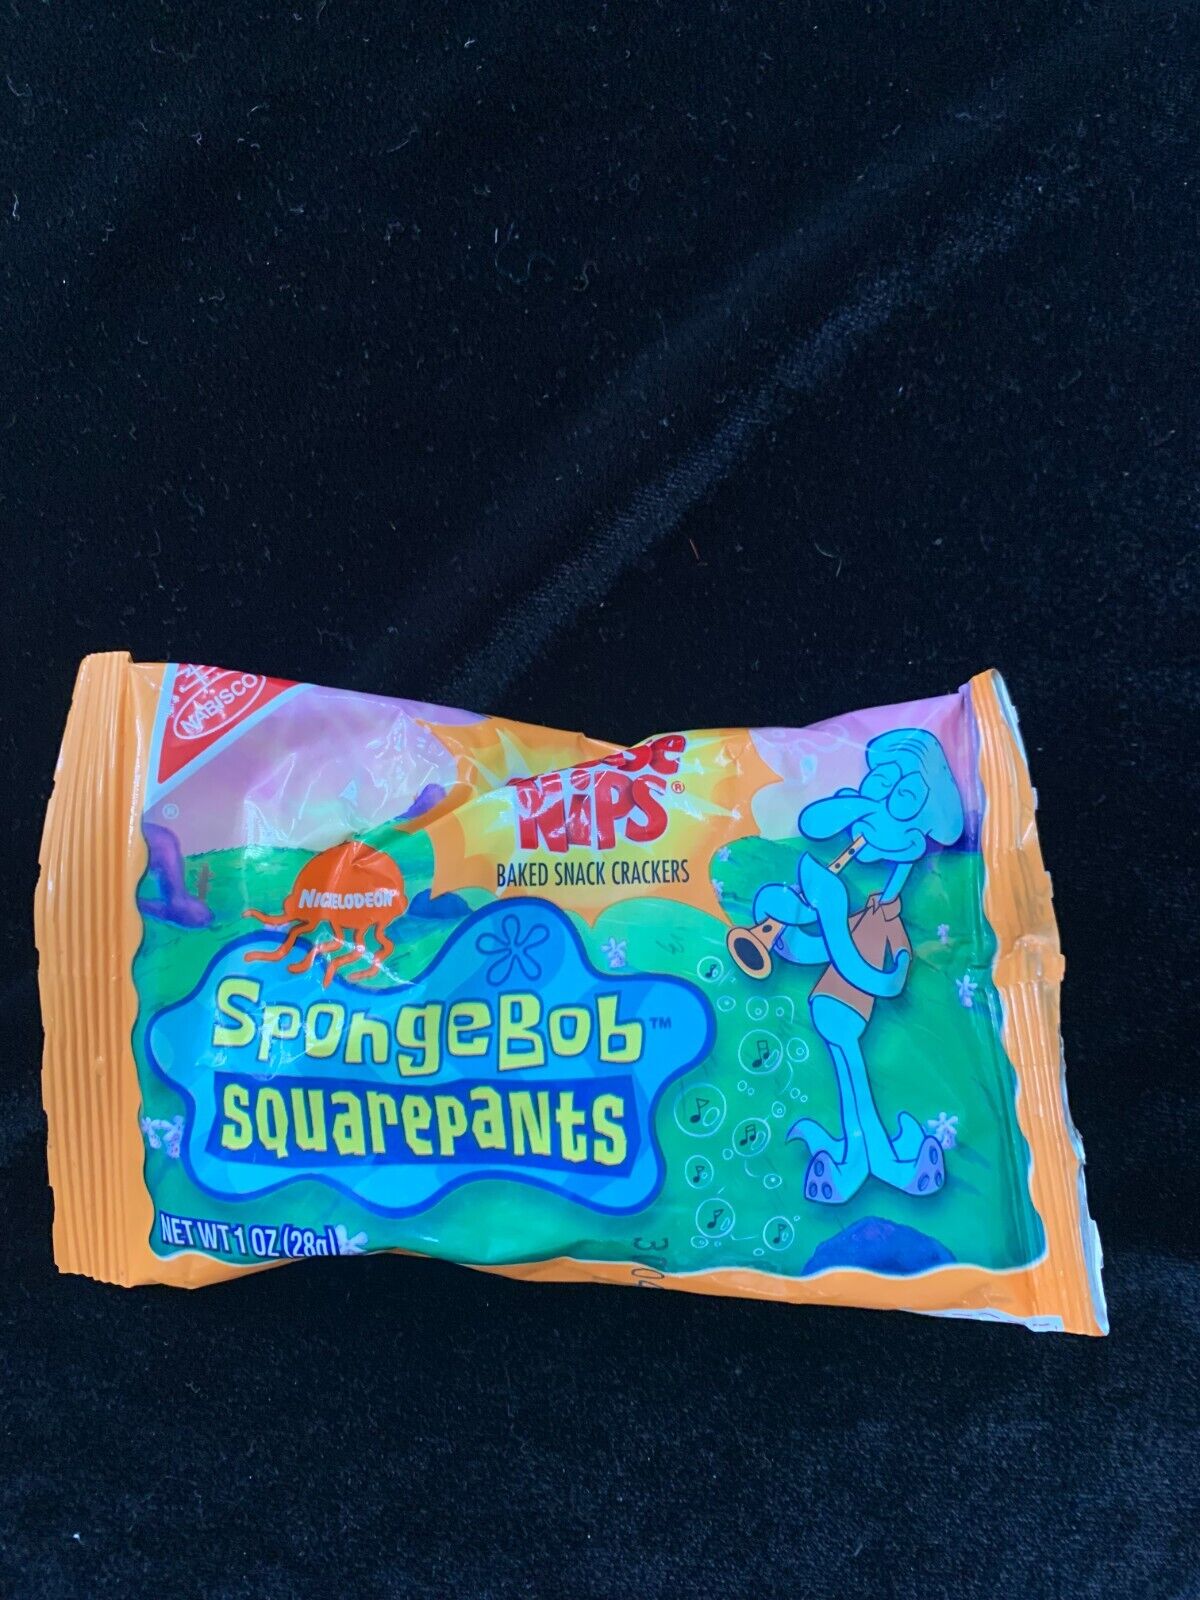 Rare 2001 SpongeBob SquarePants Small package of Cheez-Nips